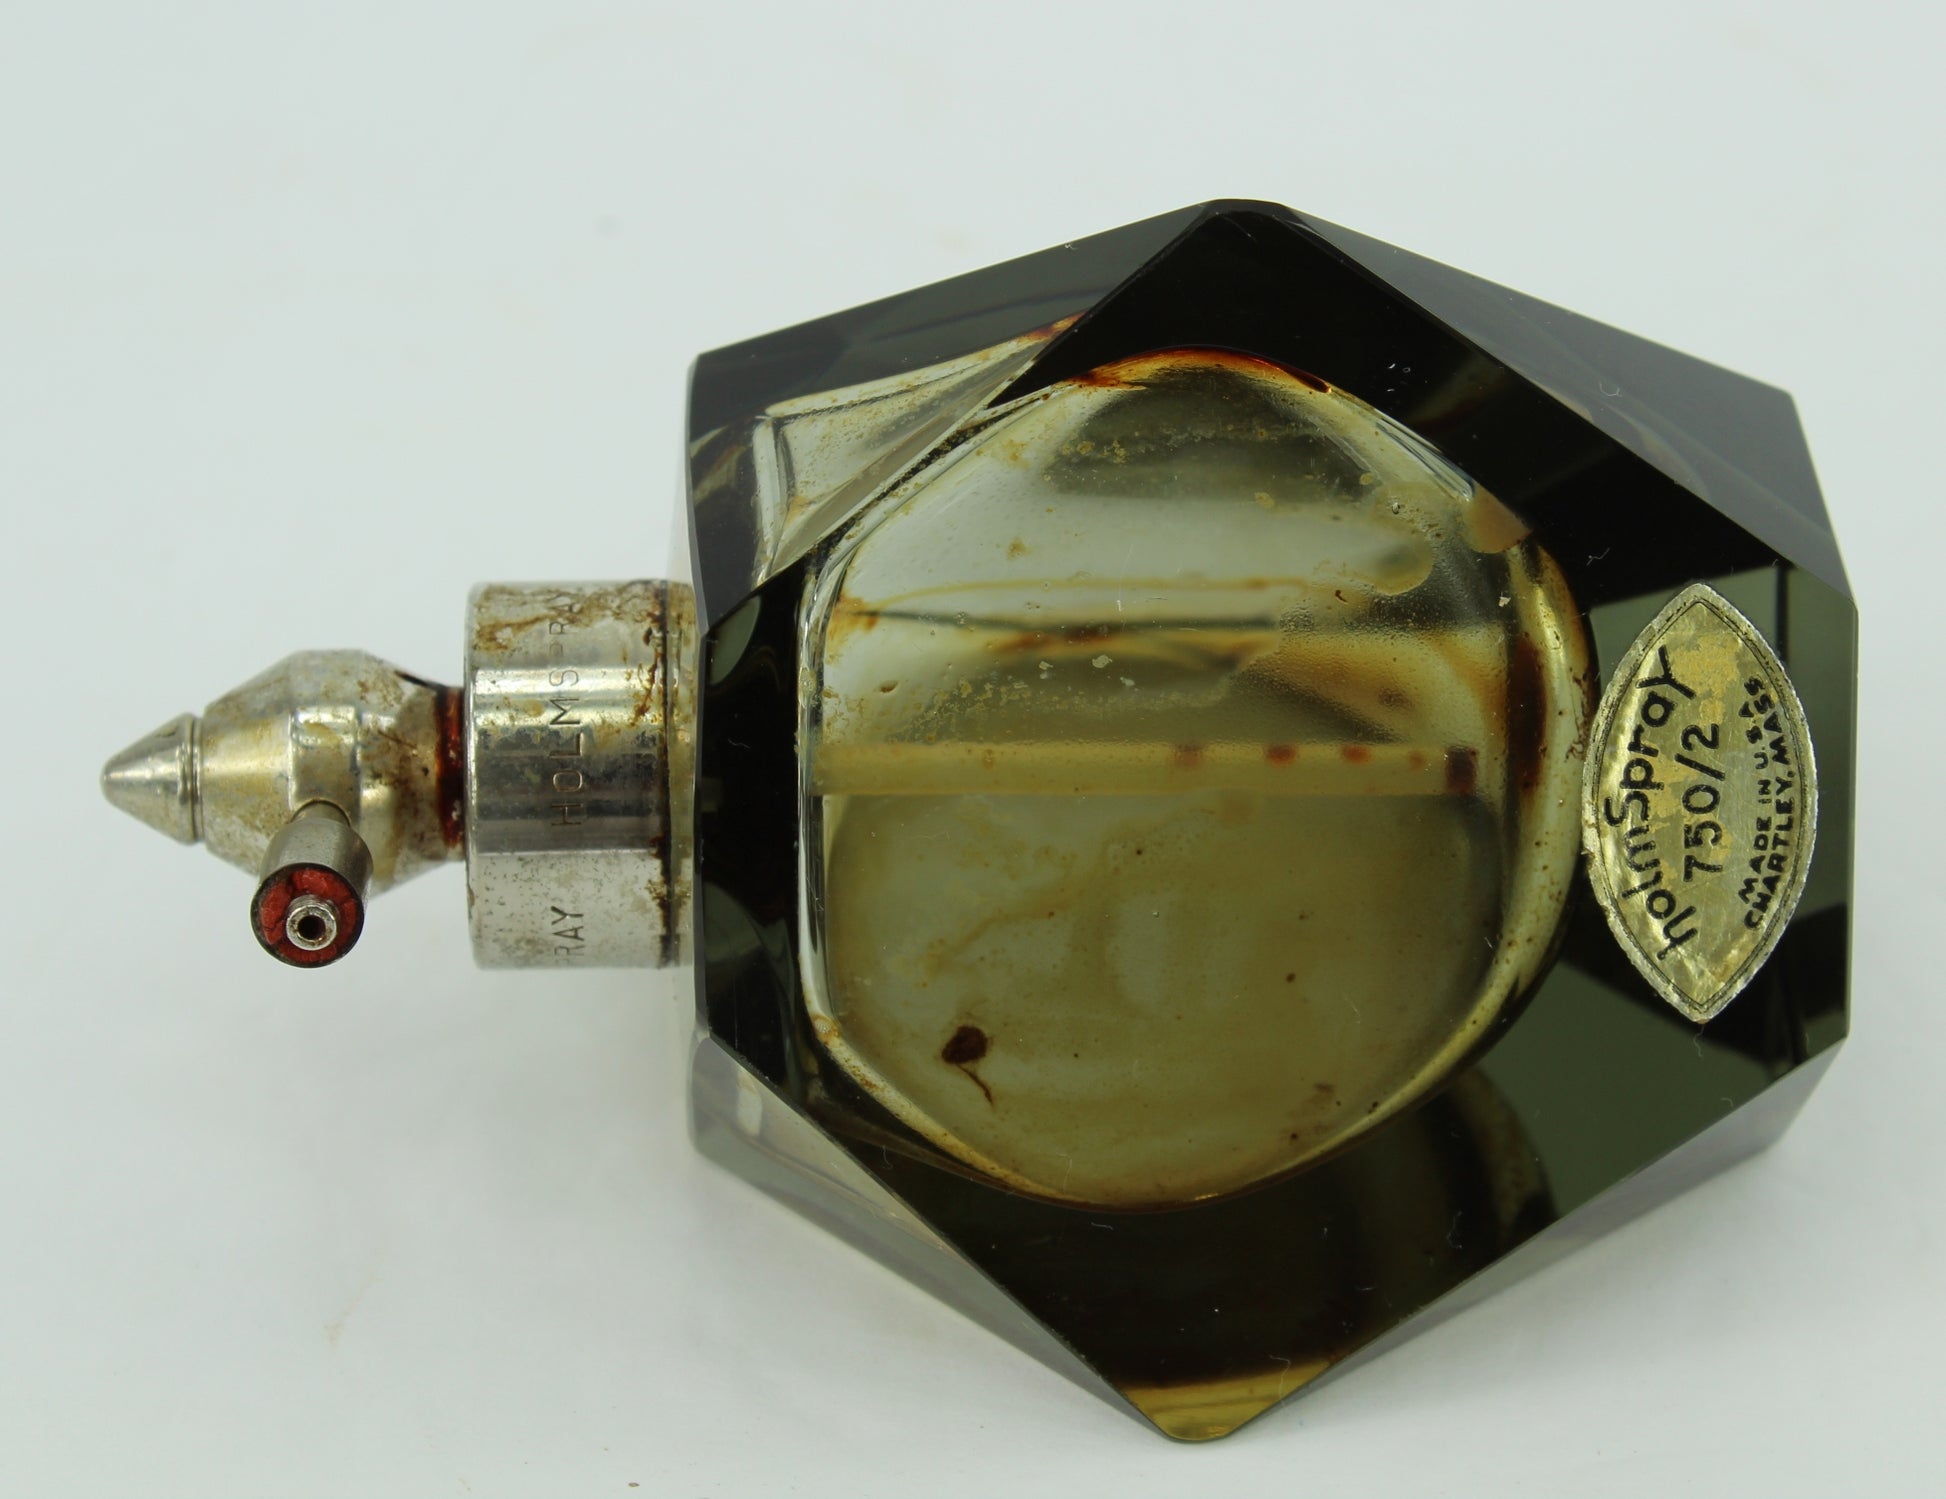 Vintage Holmspray Perfume Bottle Smoke Crystal Art Deco Made in Chartley Massachusetts USA original label and engraved maker